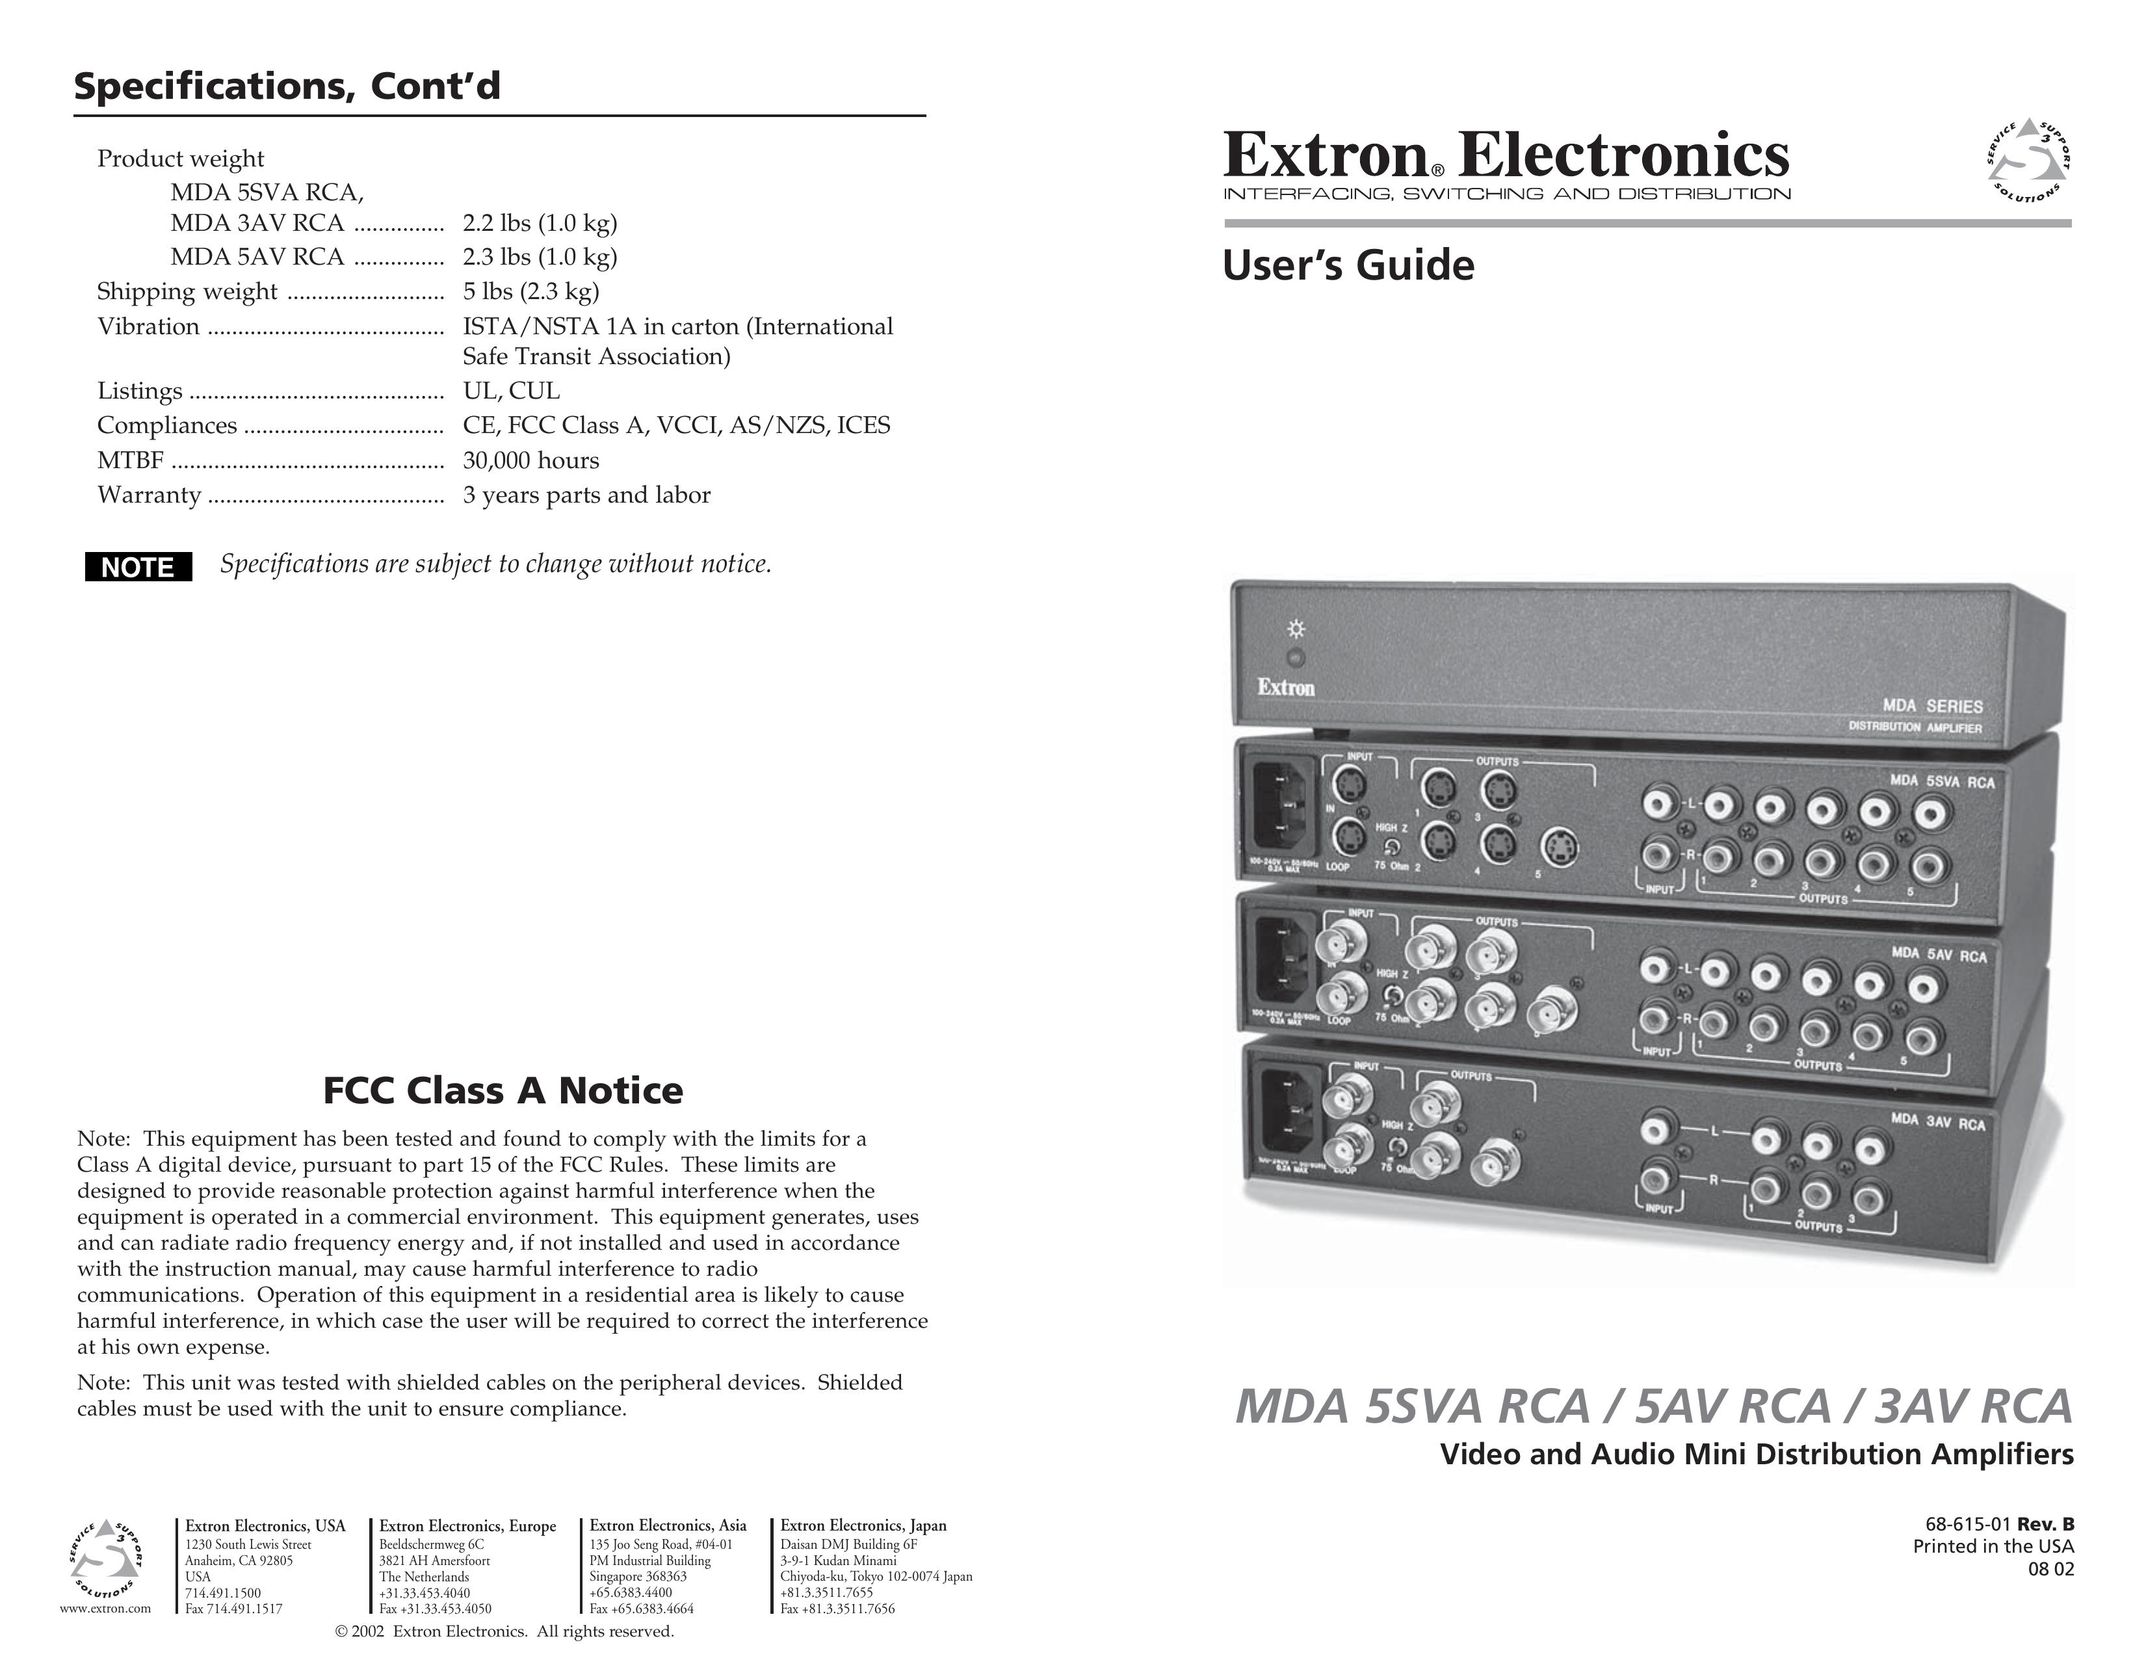 Extron electronic 3AV RCA Stereo Amplifier User Manual